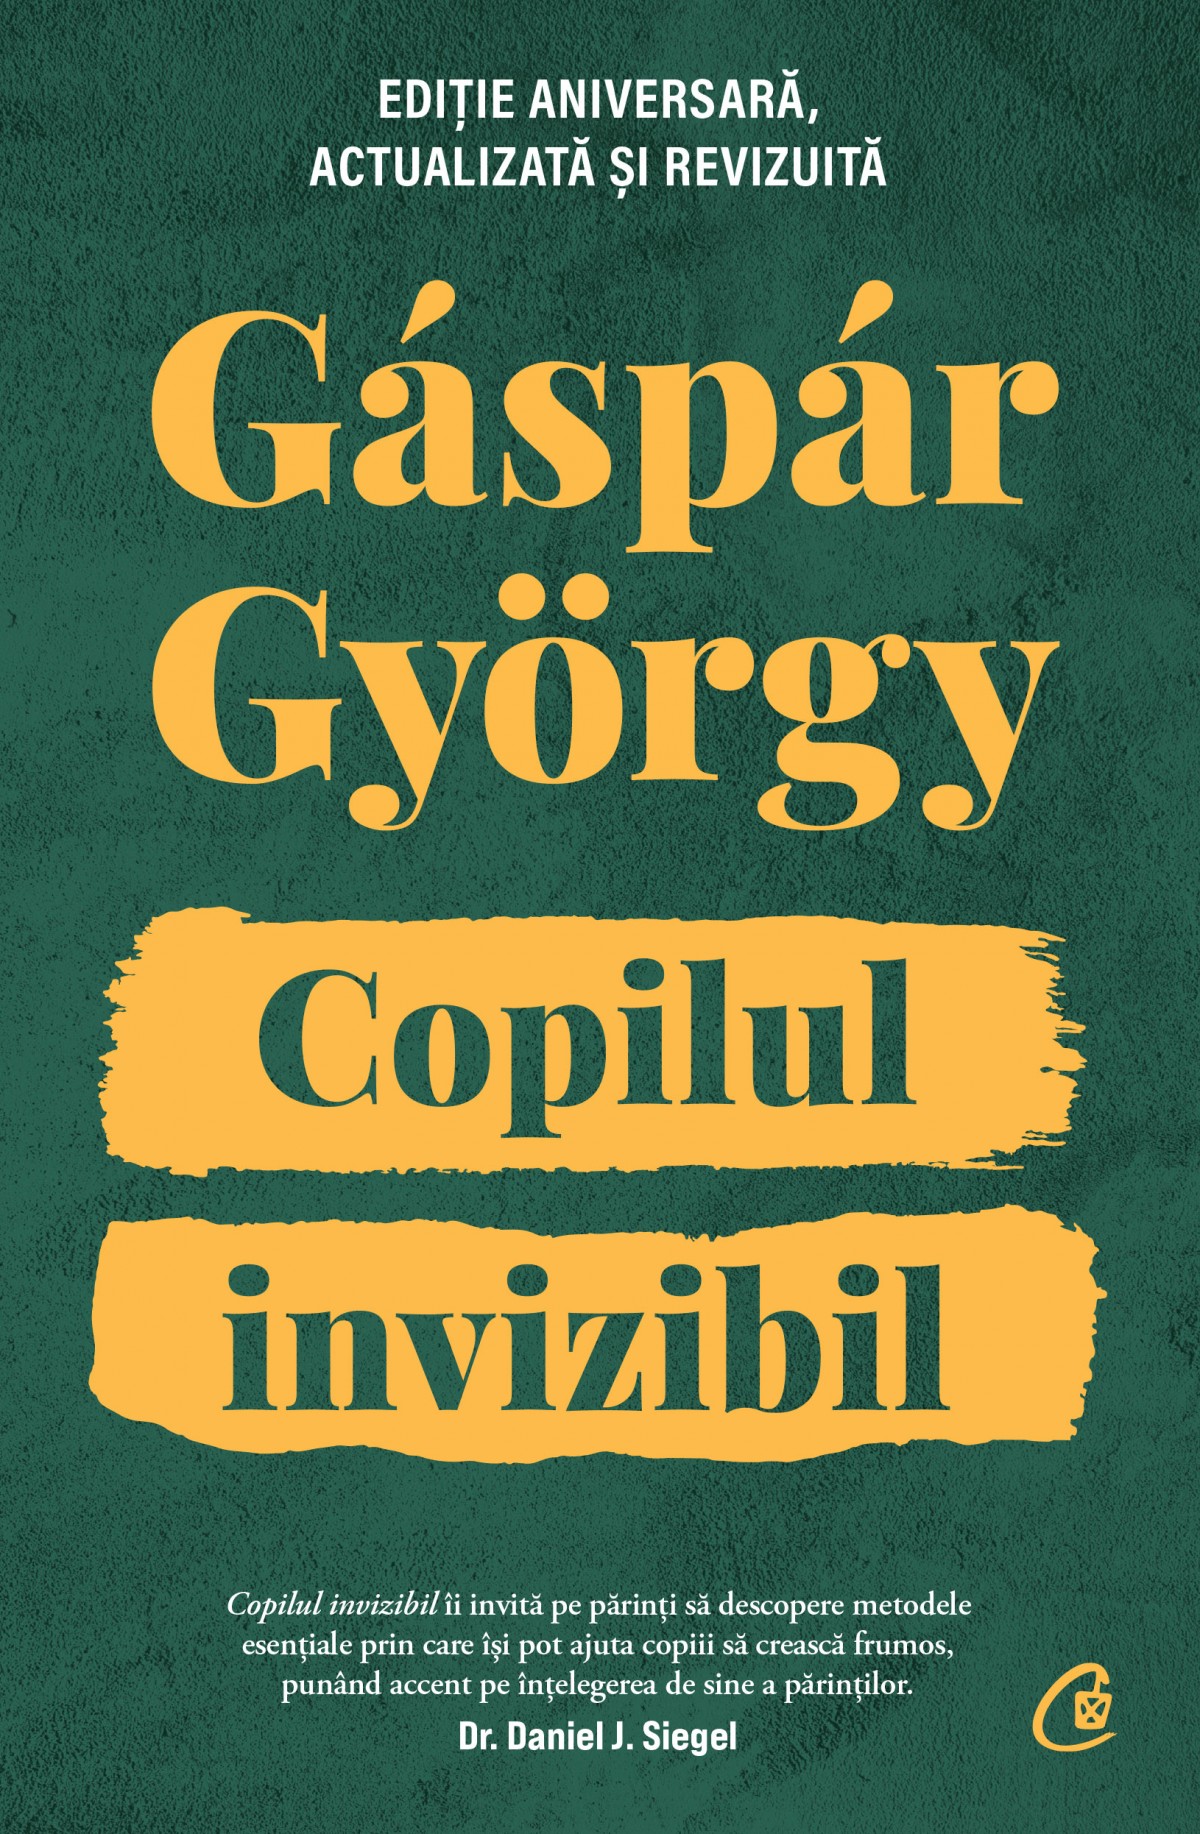 Copilul invizibil | Gaspar Gyorgy carturesti.ro poza bestsellers.ro